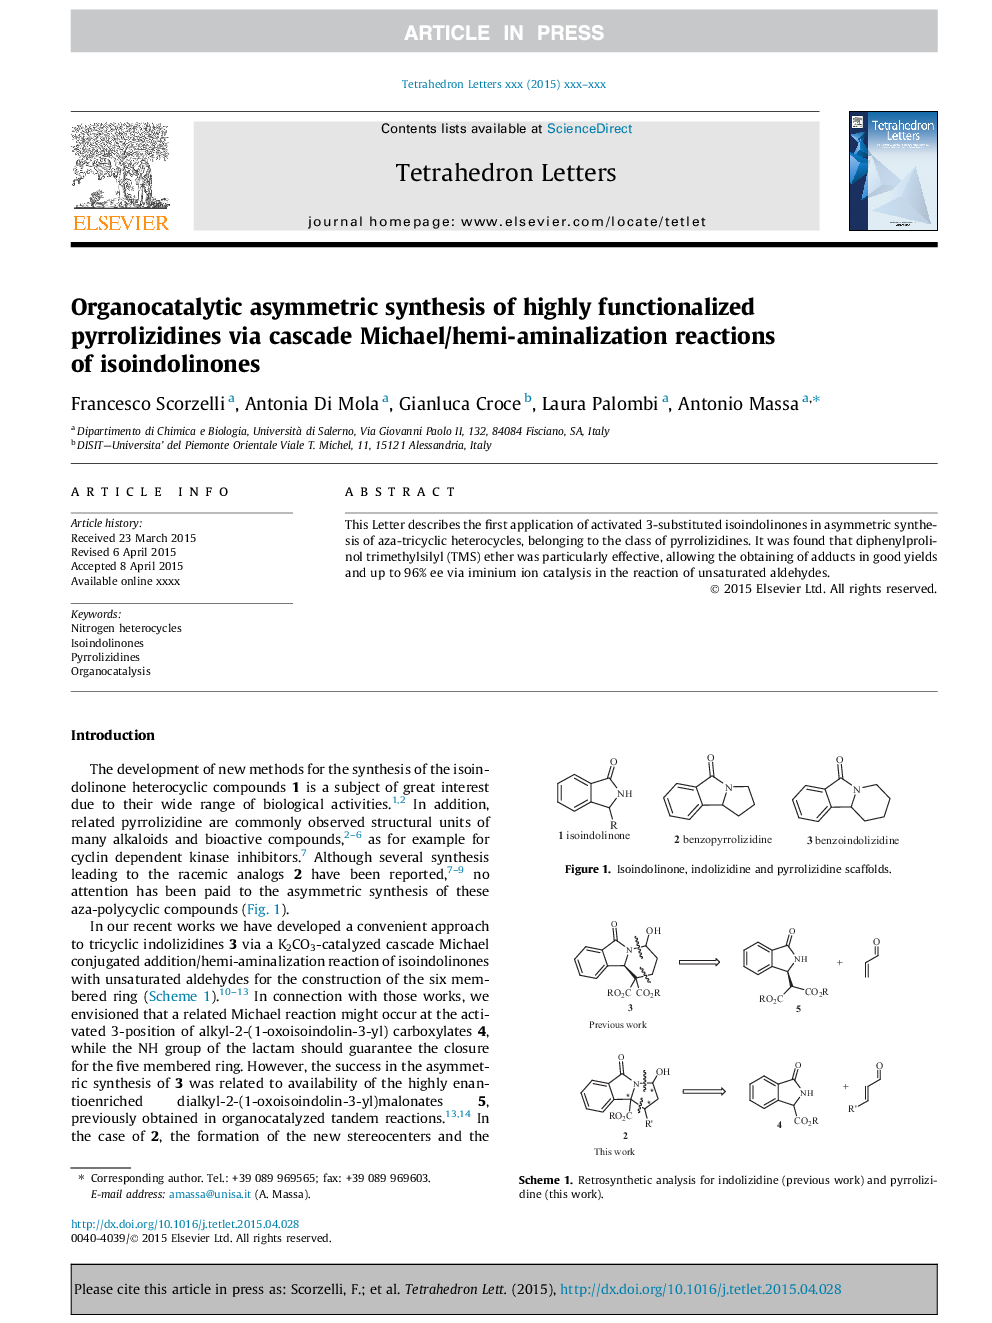 Organocatalytic asymmetric synthesis of highly functionalized pyrrolizidines via cascade Michael/hemi-aminalization reactions of isoindolinones